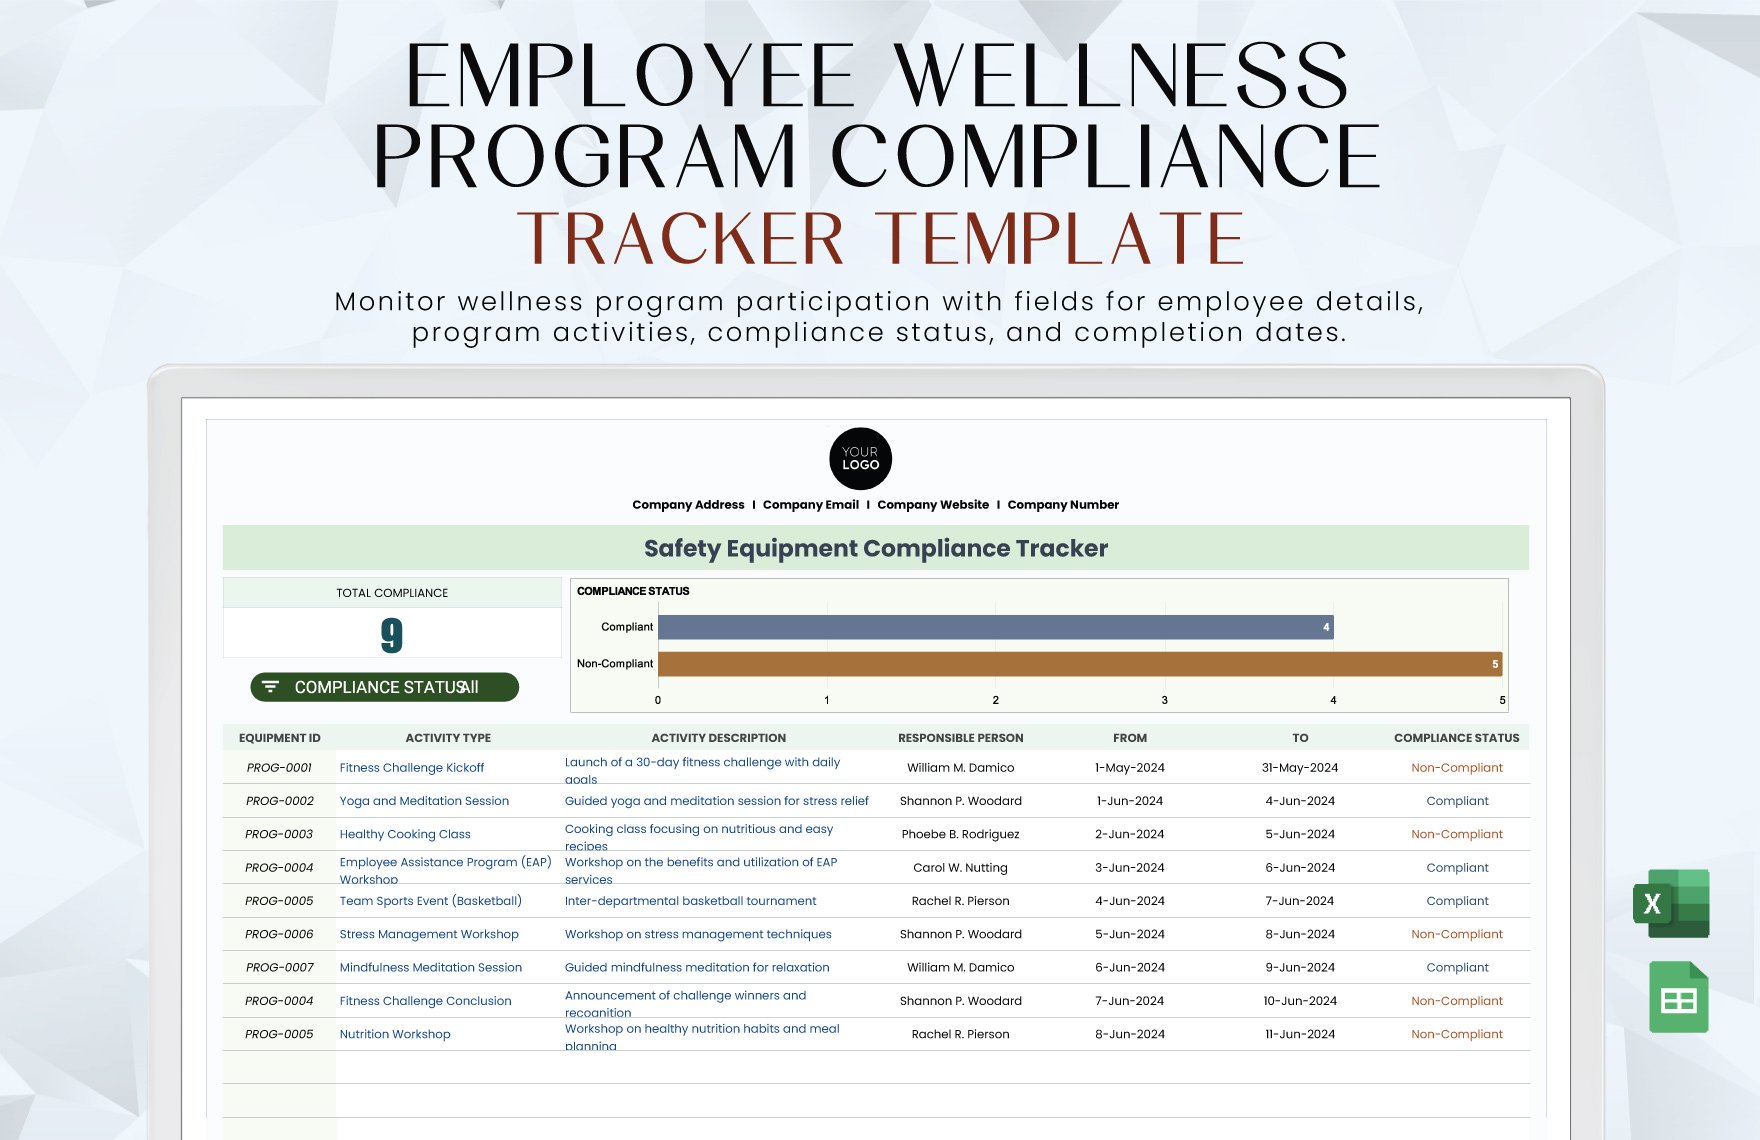 Employee Wellness Program Compliance Tracker Template in Excel, Google Sheets